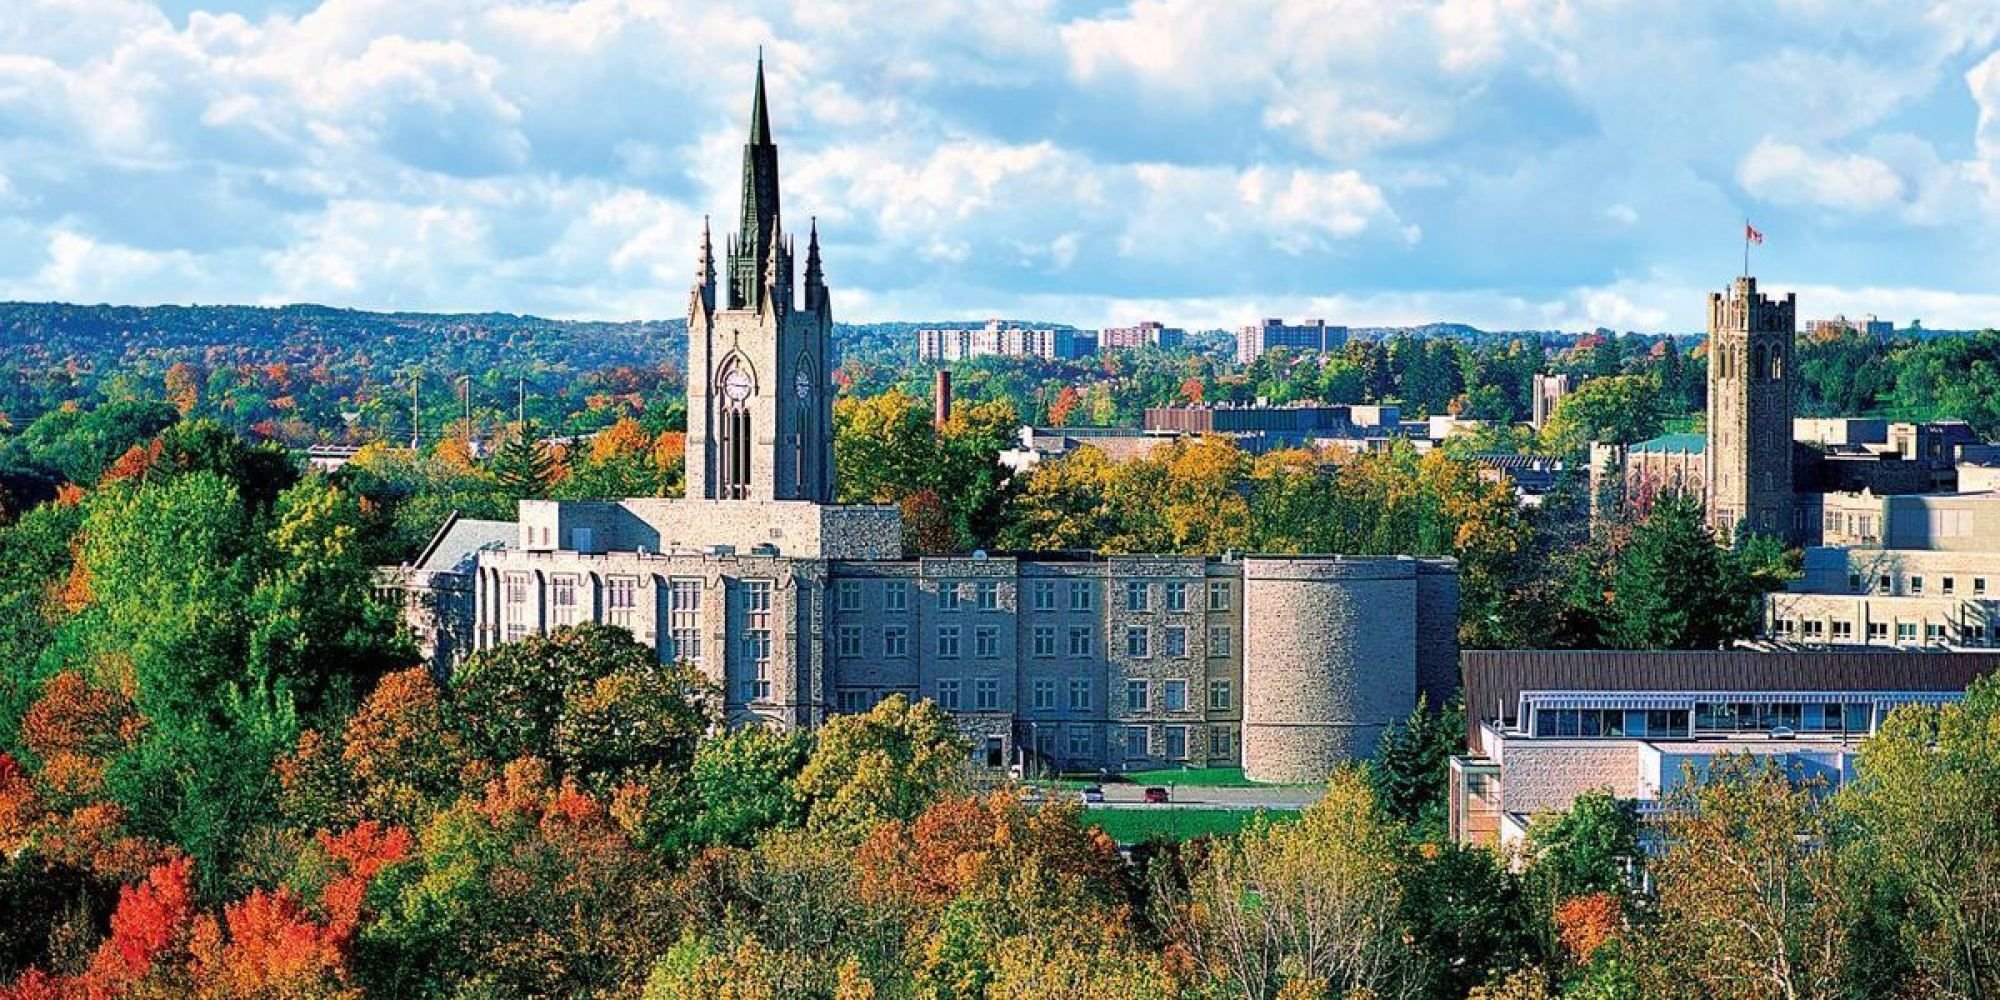 University of Western Ontario (Western University)